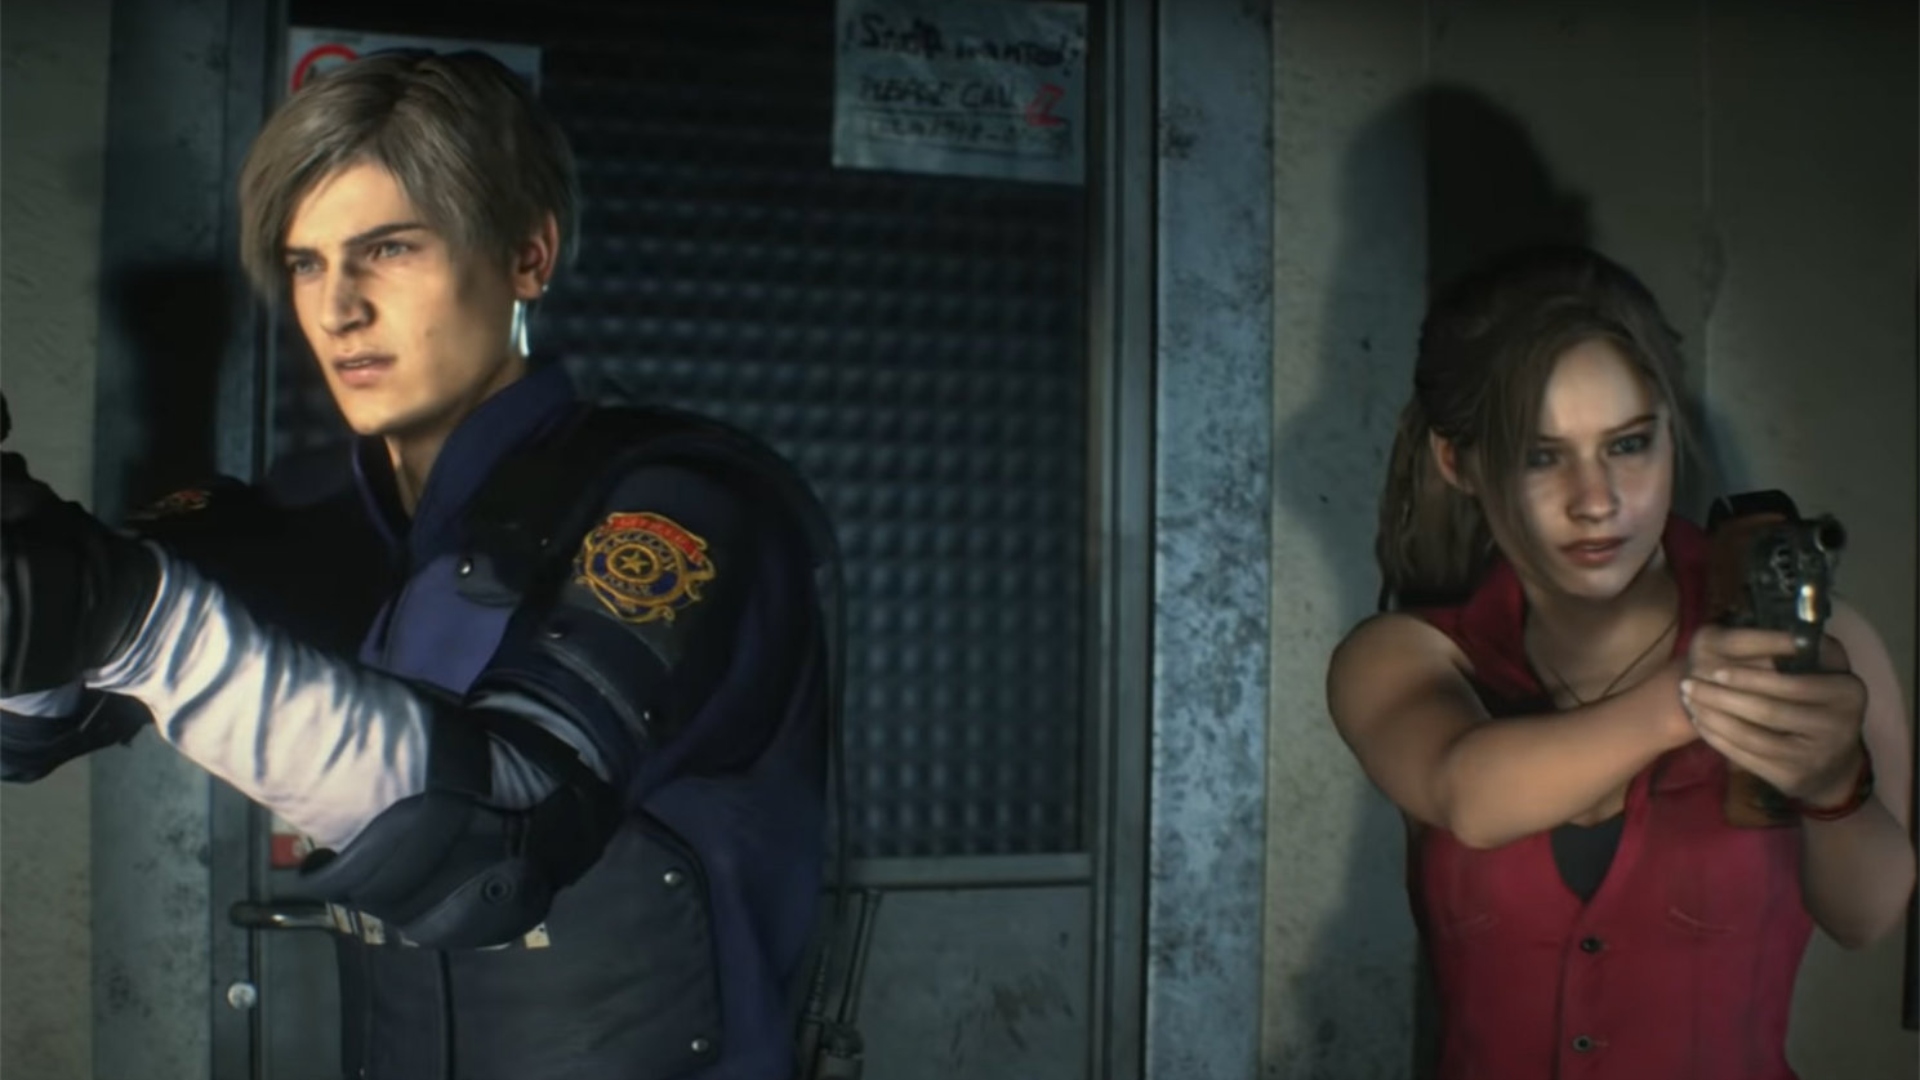 EvilHazard  Resident Evil & Survival Horror on X: Claire